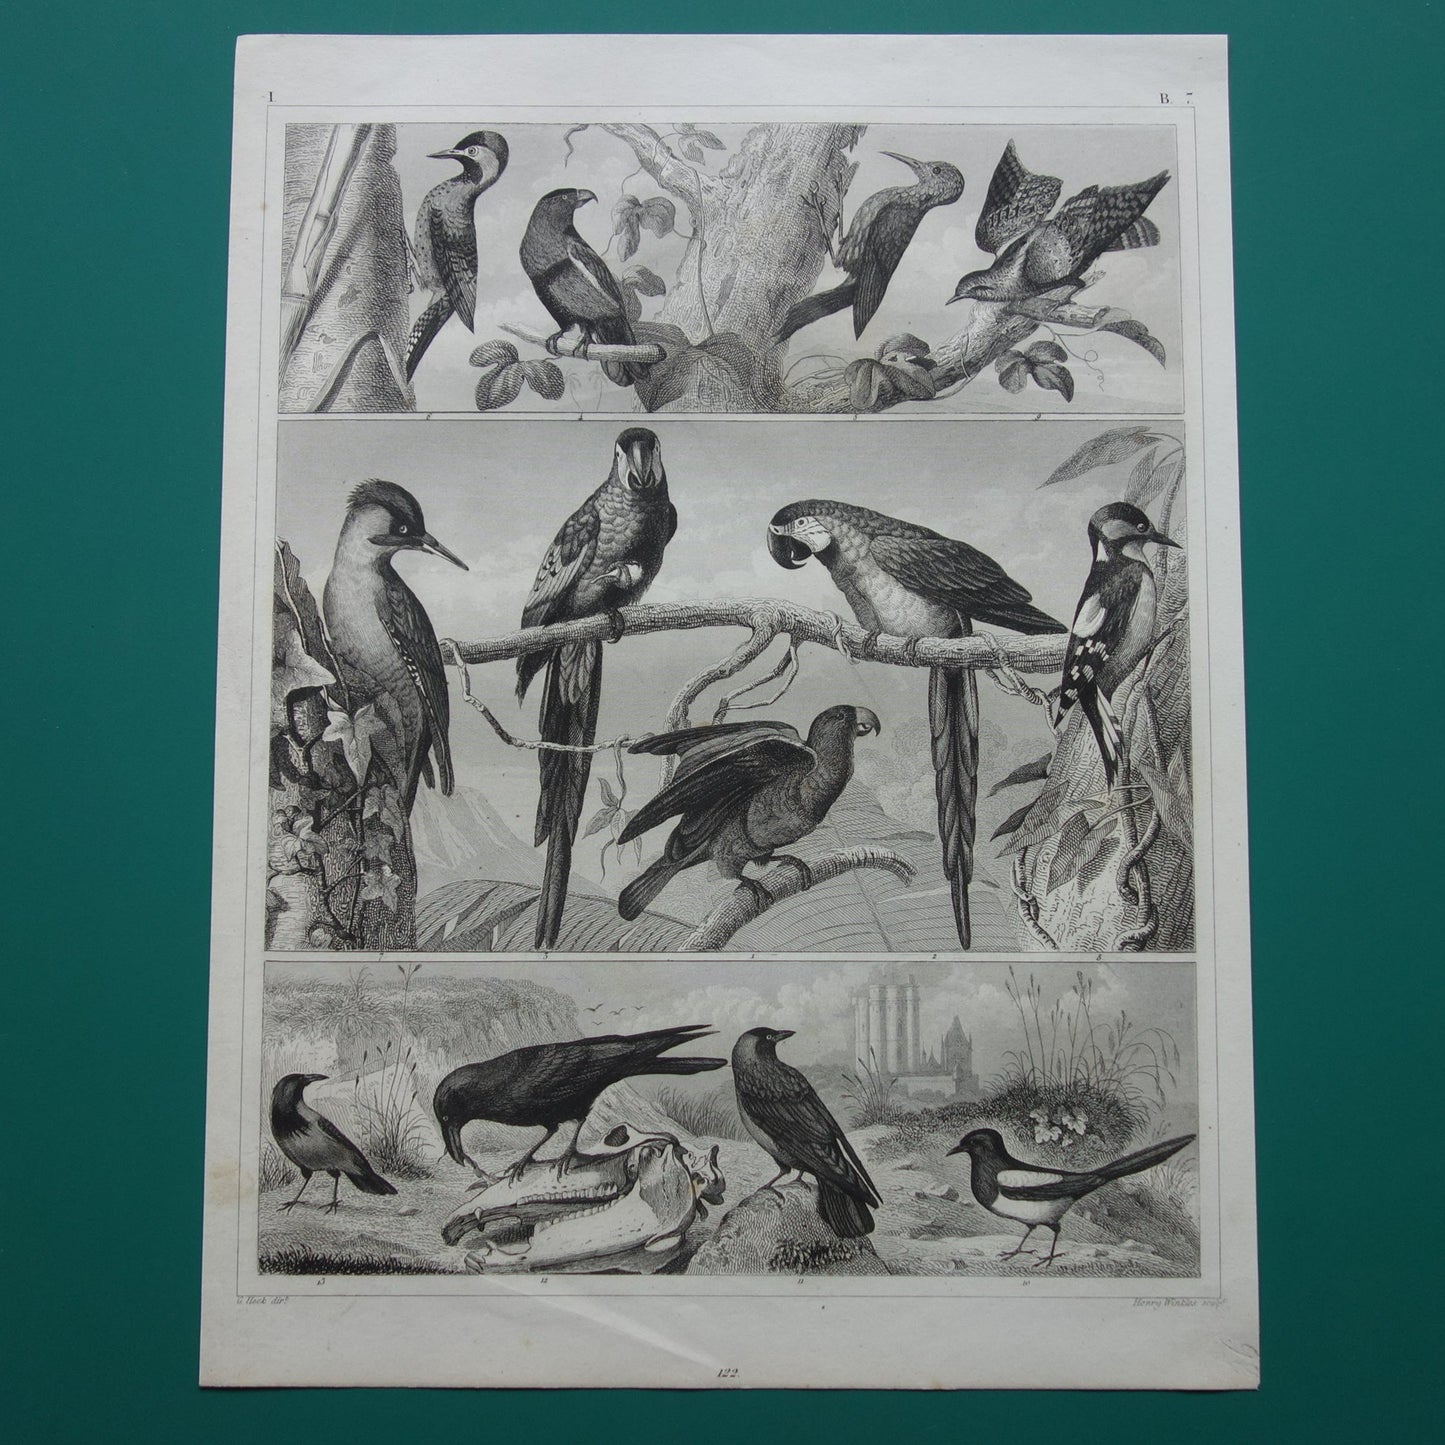 Antieke vogel prent van Papegaai Ara Specht - originele 170+ jaar oude illustratie Raaf Lori - vintage vogels afbeelding prints